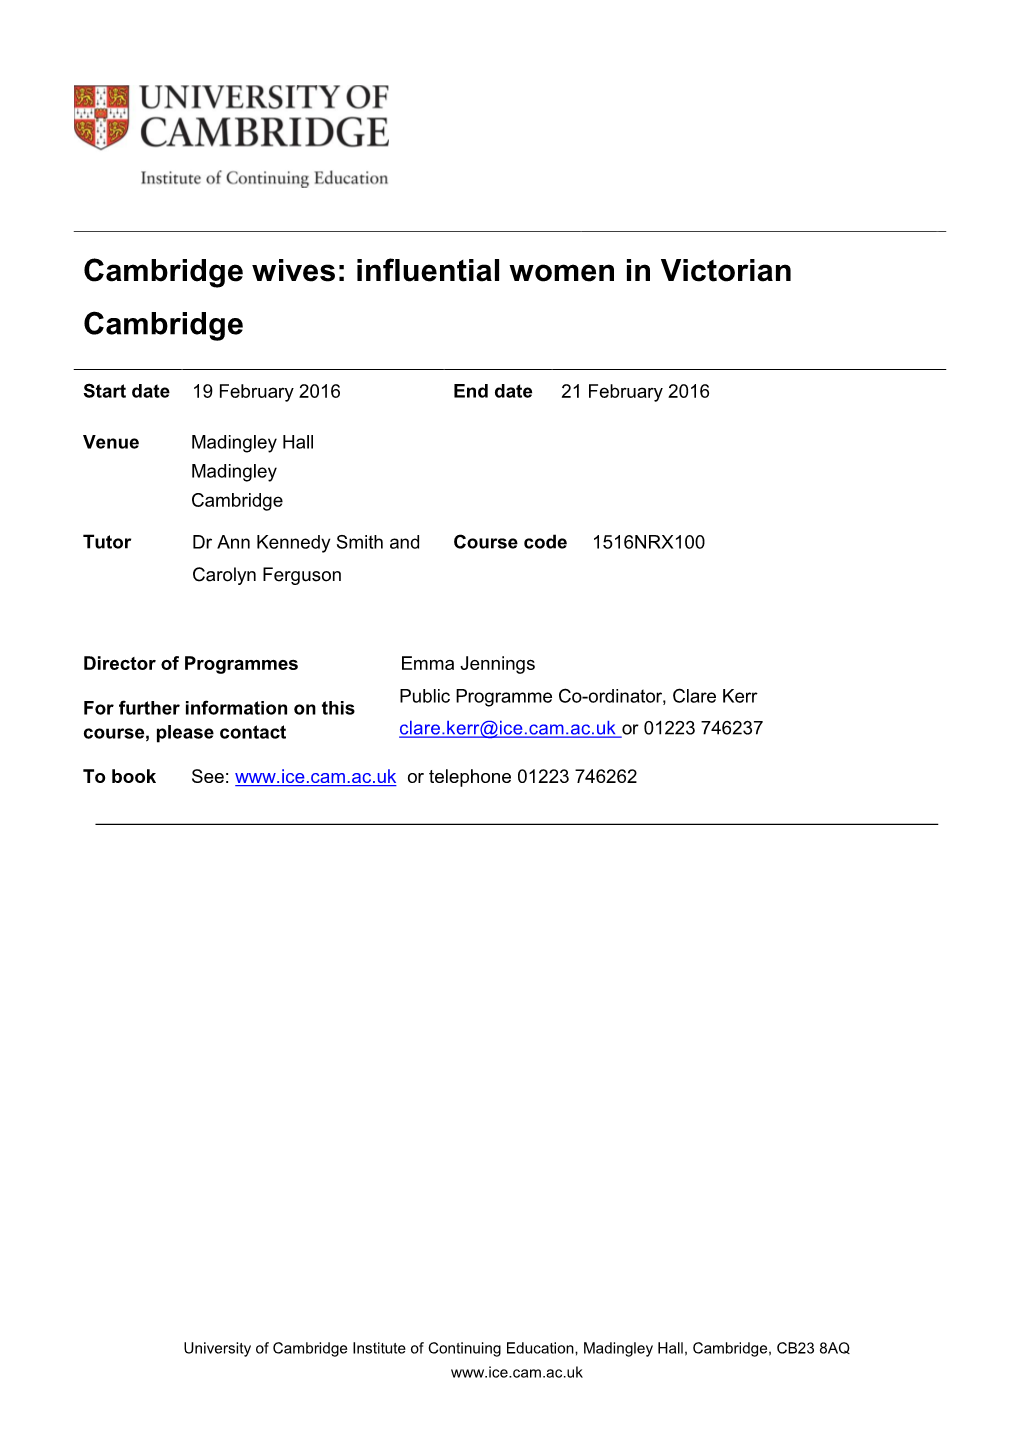 Cambridge Wives: Influential Women in Victorian Cambridge